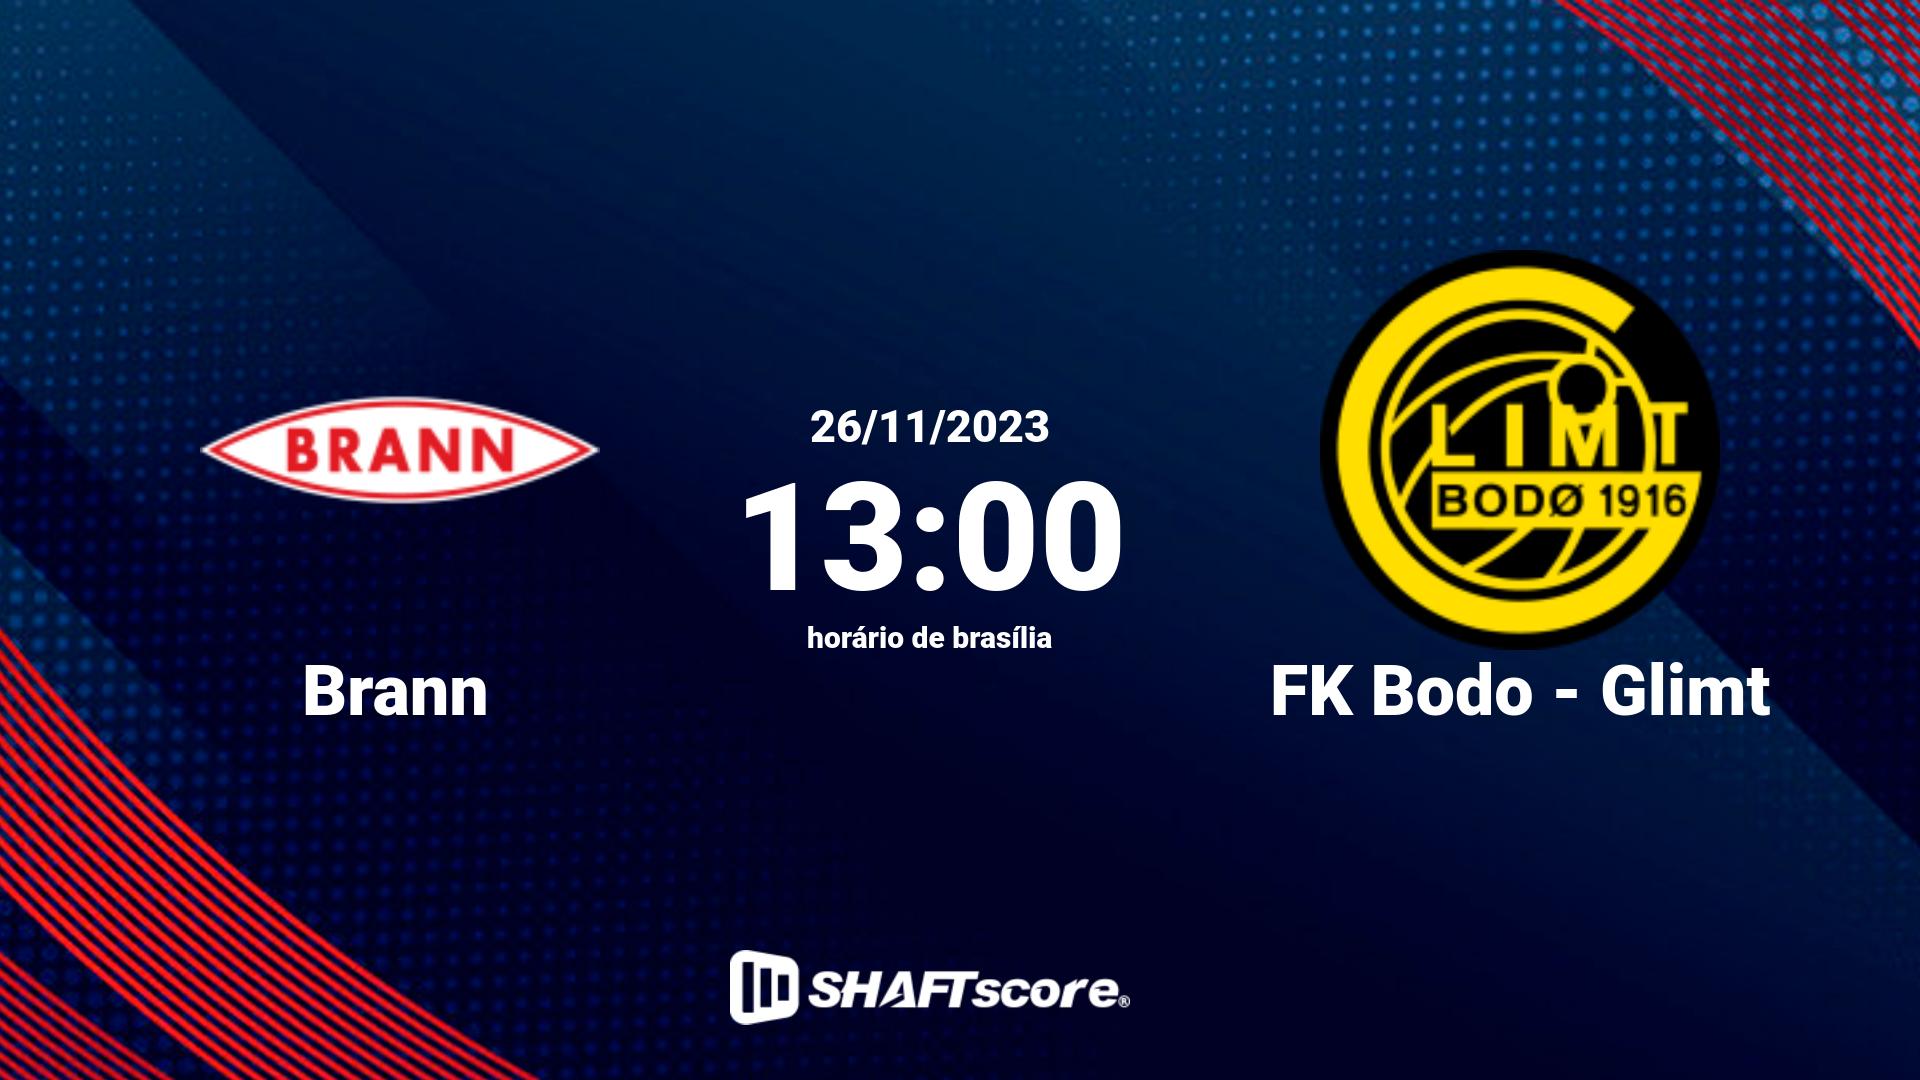 Estatísticas do jogo Brann vs FK Bodo - Glimt 26.11 13:00